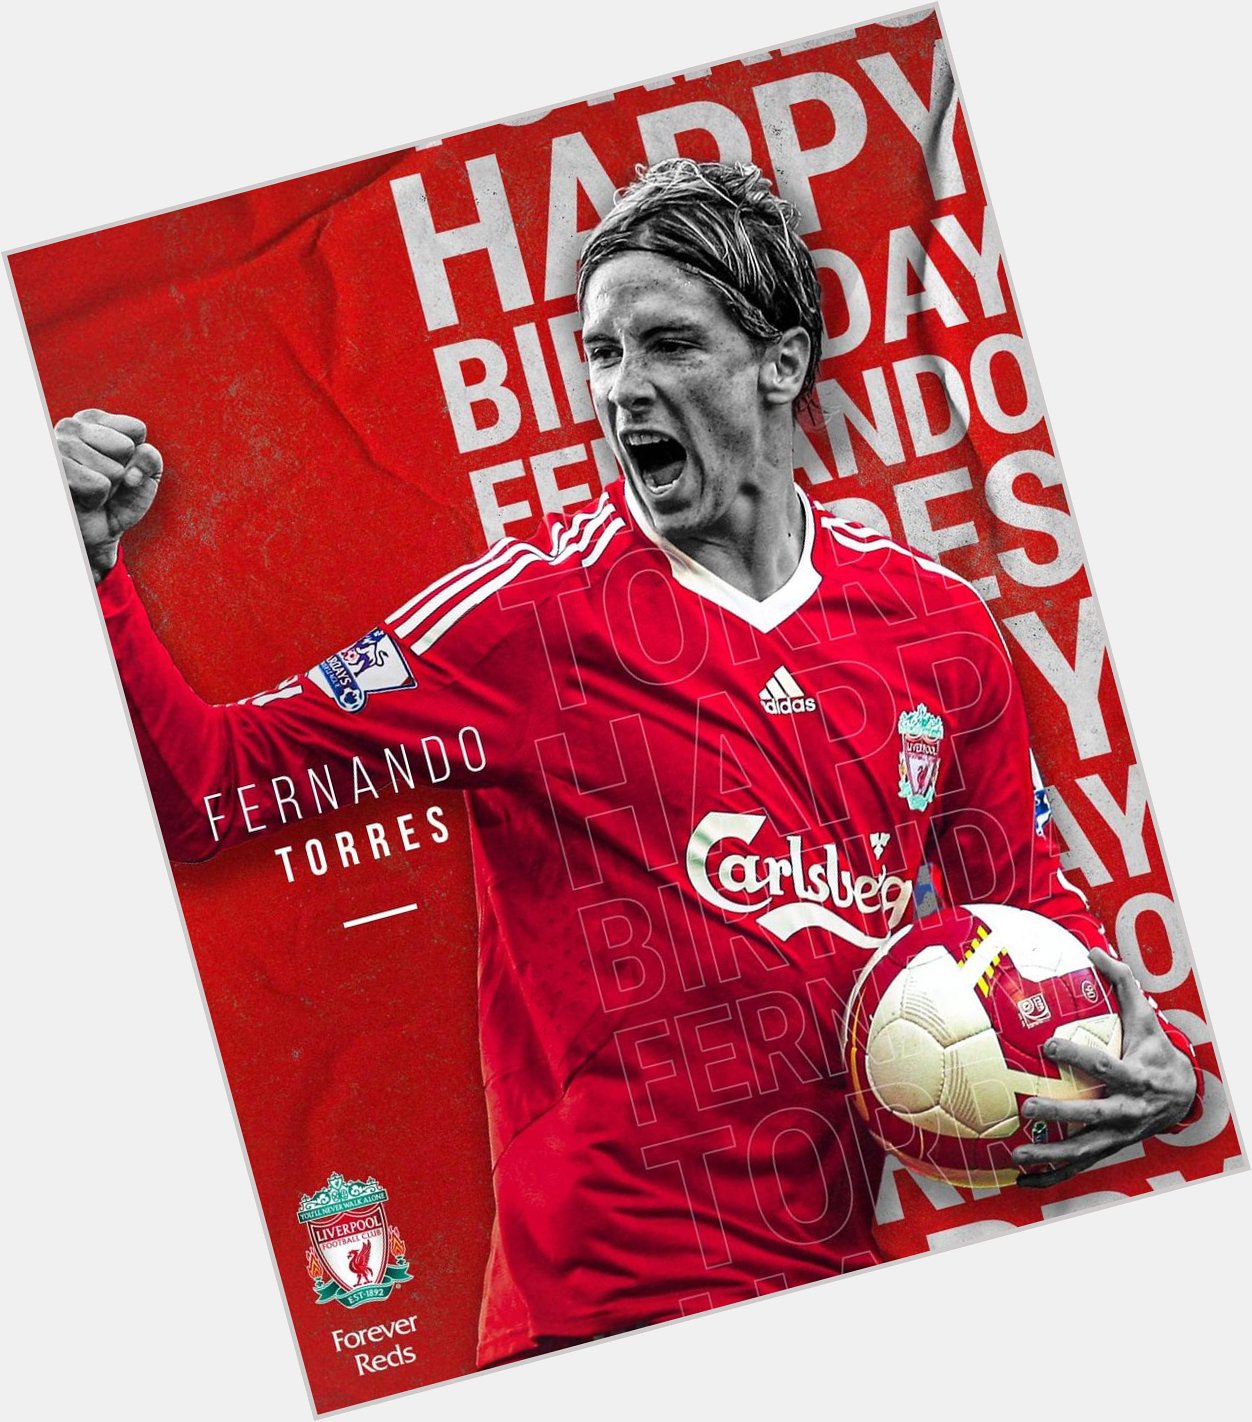 Wishing Fernando Torres a very happy birthday 